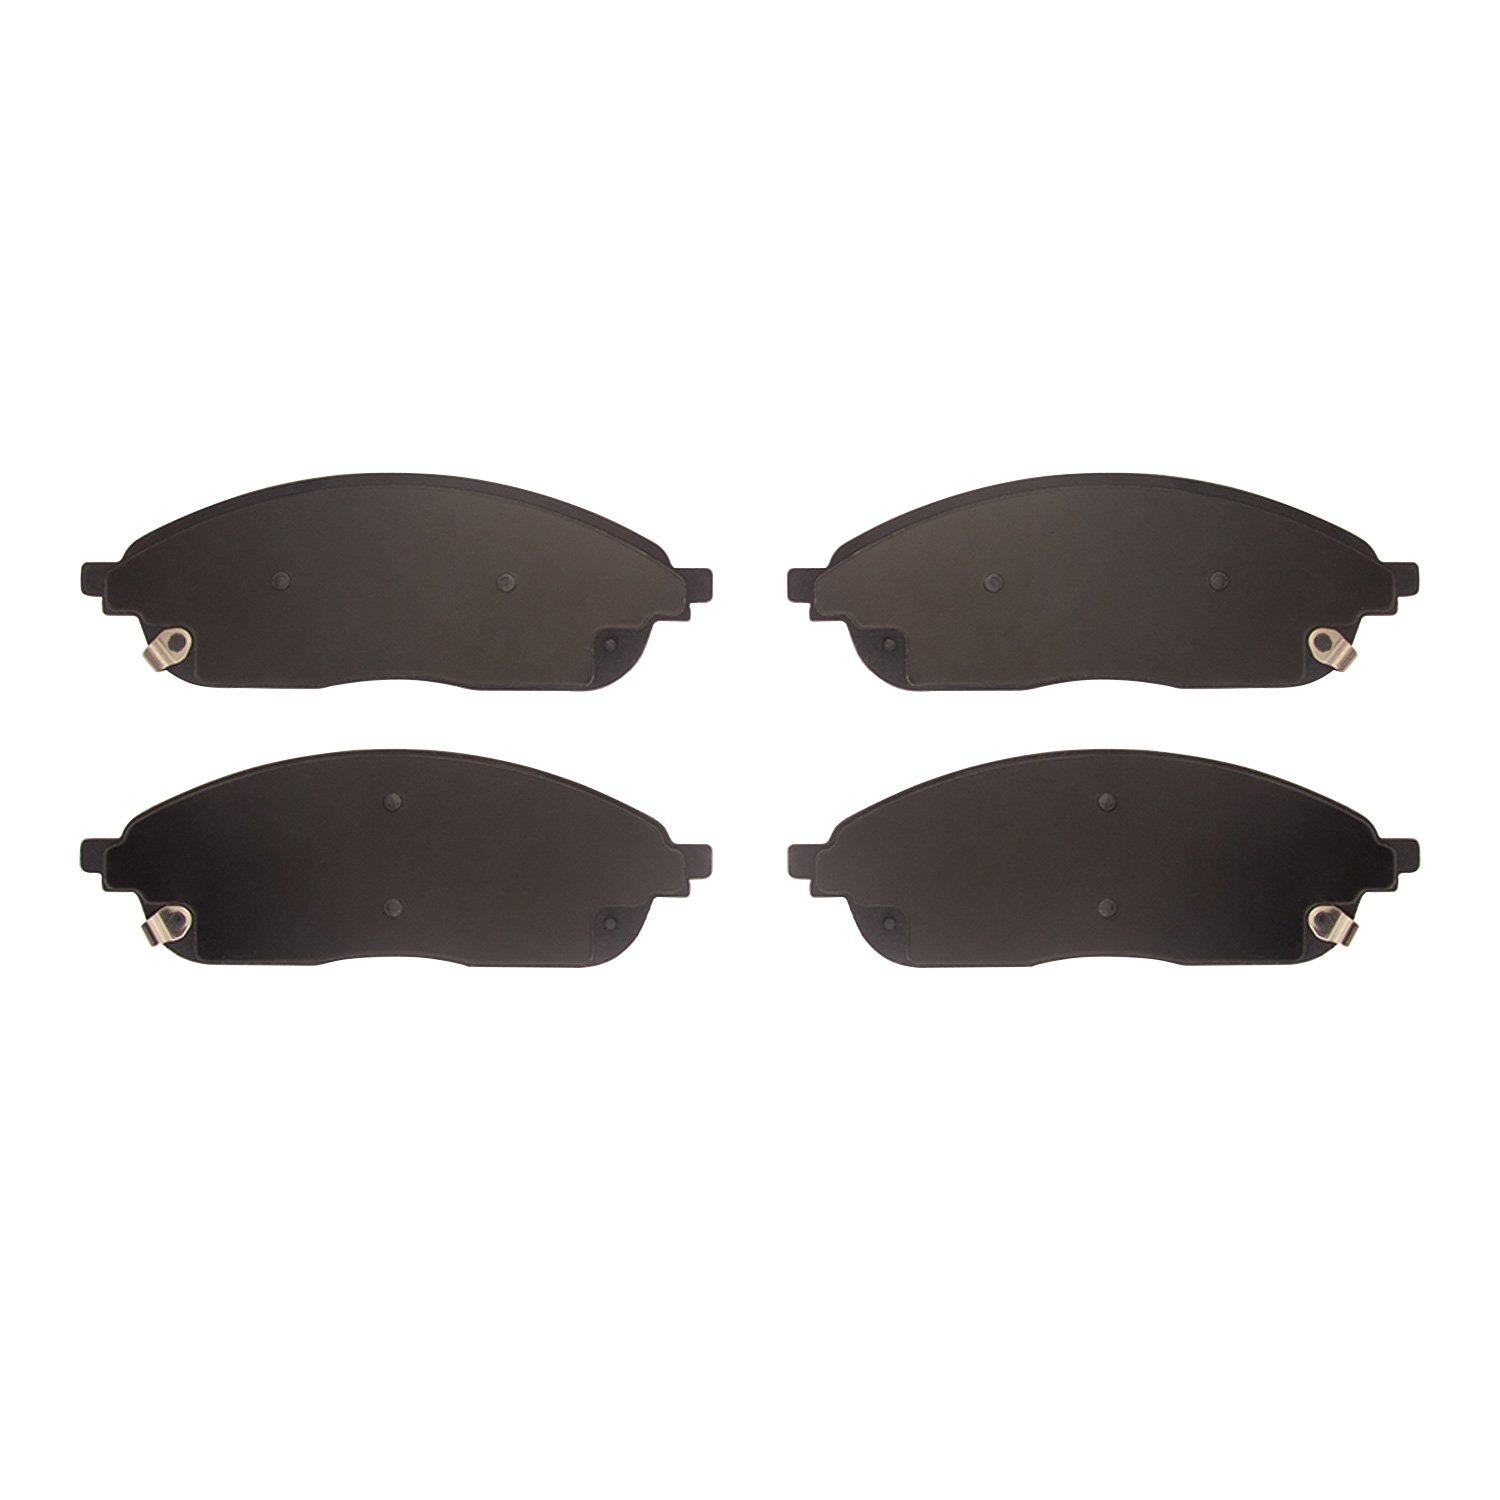 1551-2436-00 5000 Advanced Ceramic Brake Pads, Fits Select Mopar, Position: Front